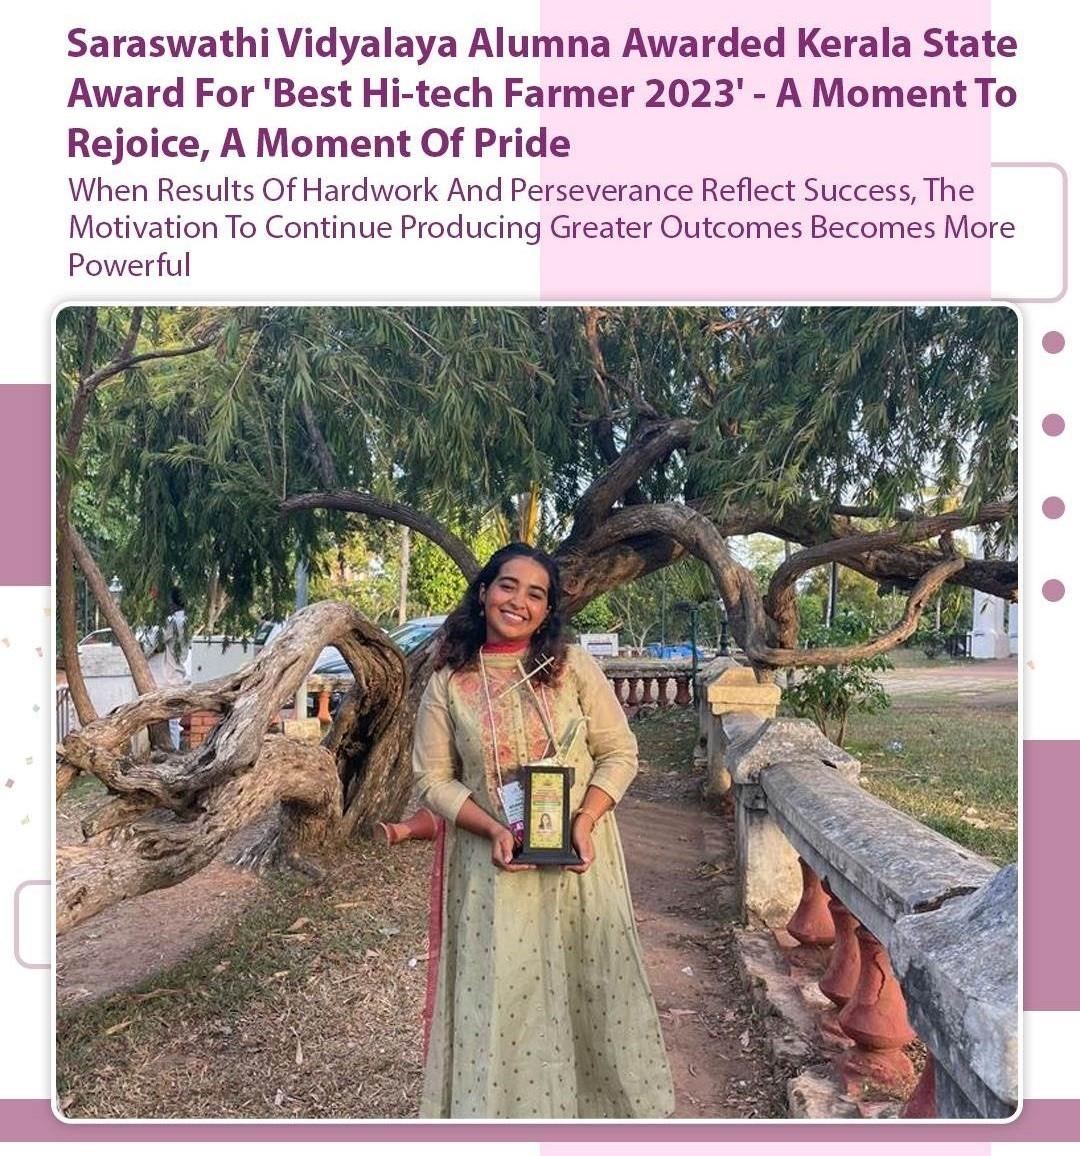 Saraswathi Vidyalaya Alumna Awarded Kerala State Award For Best Hi-tech Farmer 2023 - A Moment To Rejoice, A Moment Of Pride